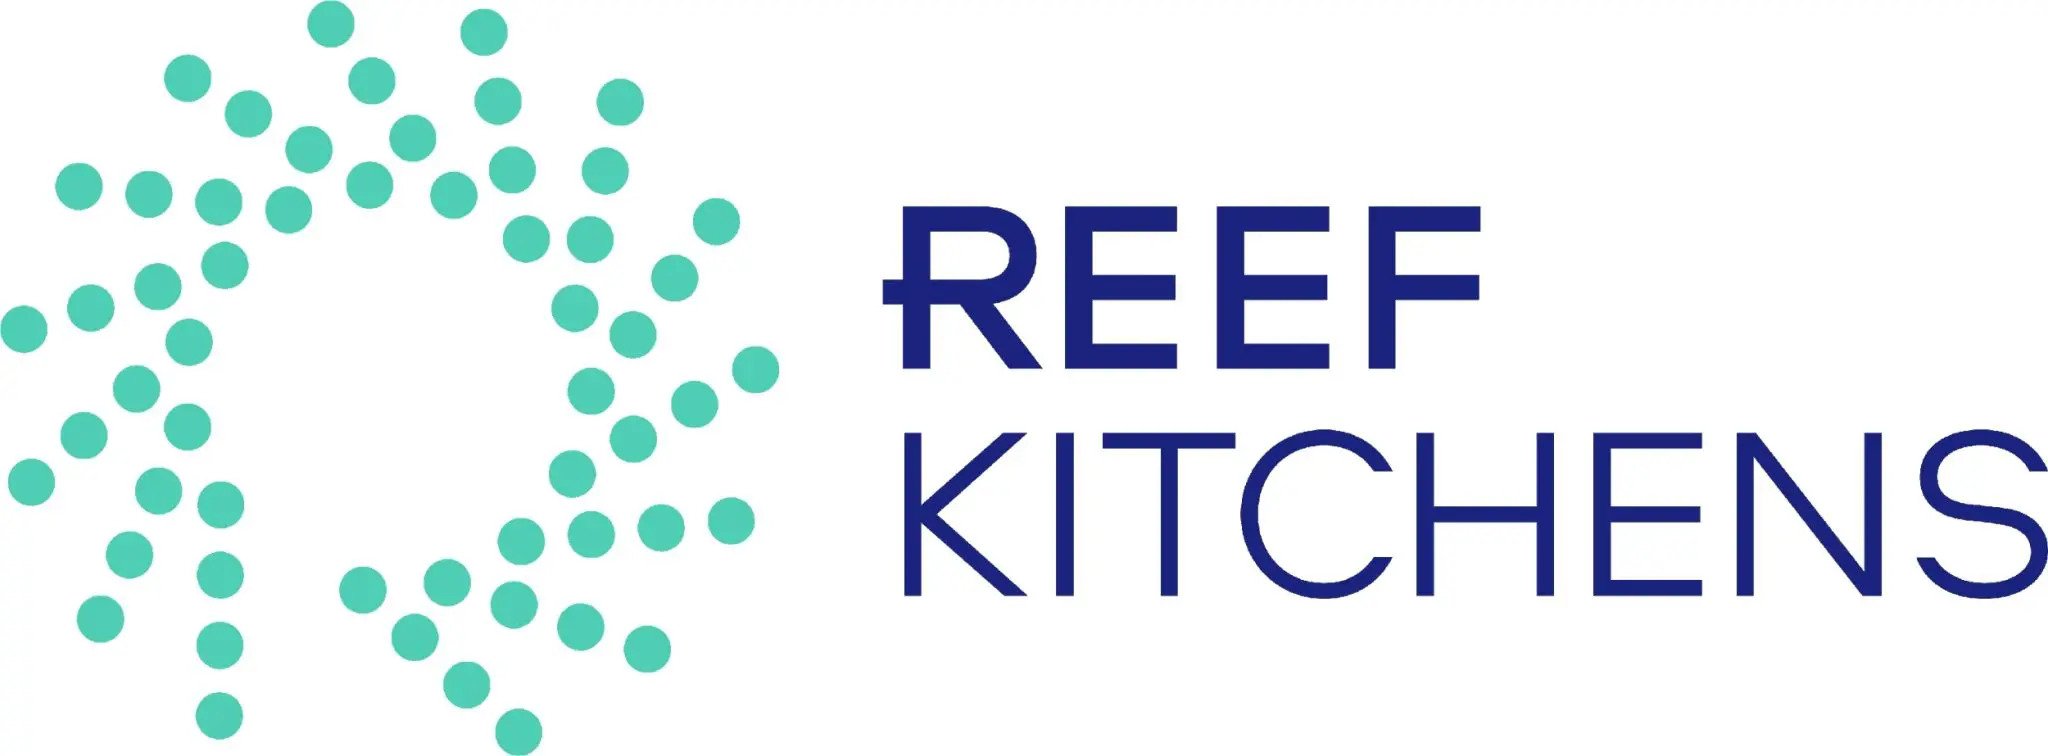 Reef Kitchens